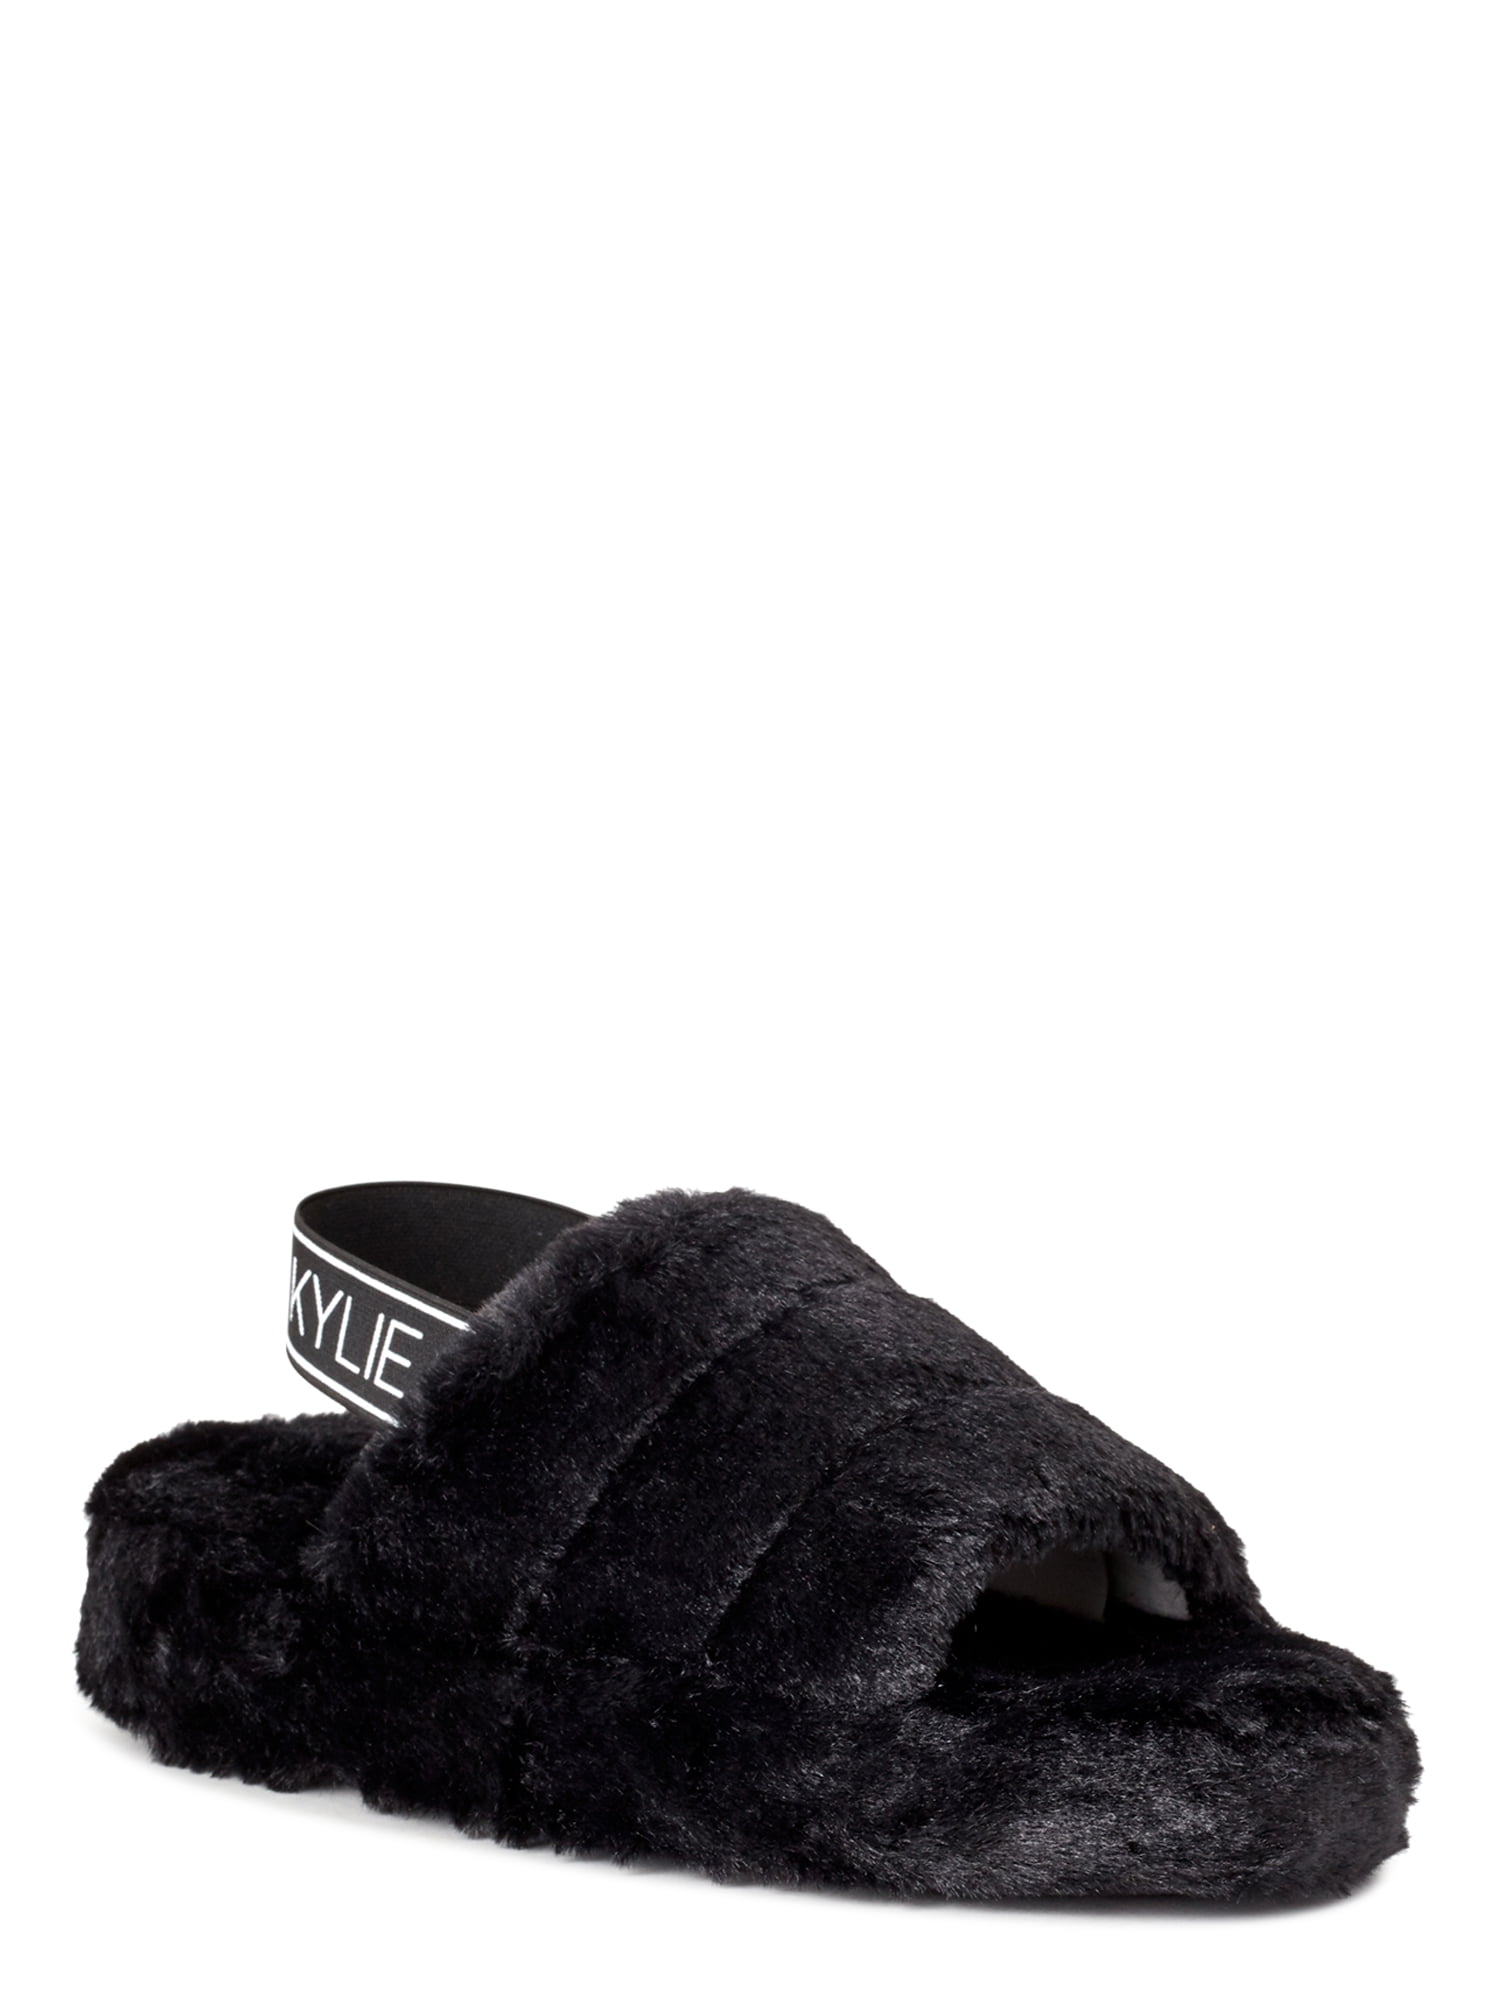 black slippers walmart